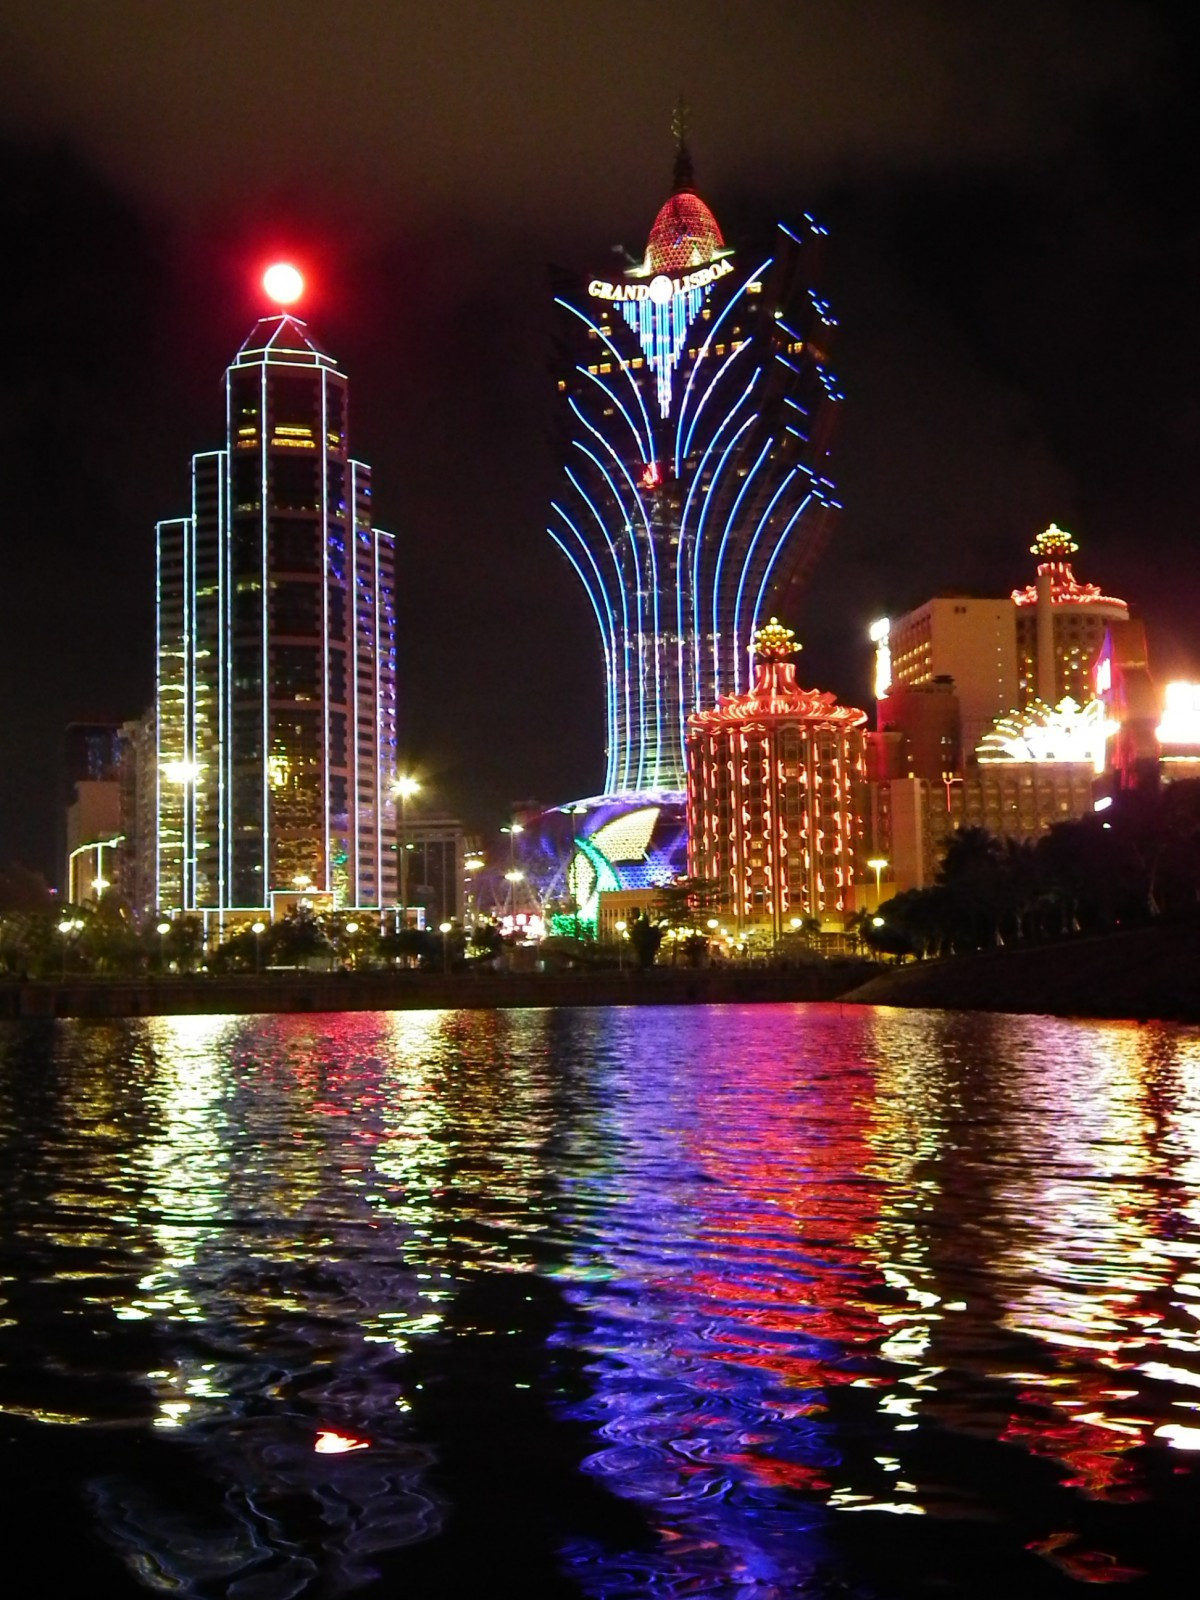 Macau casino casinos at night city at night grand lisboa 1416240